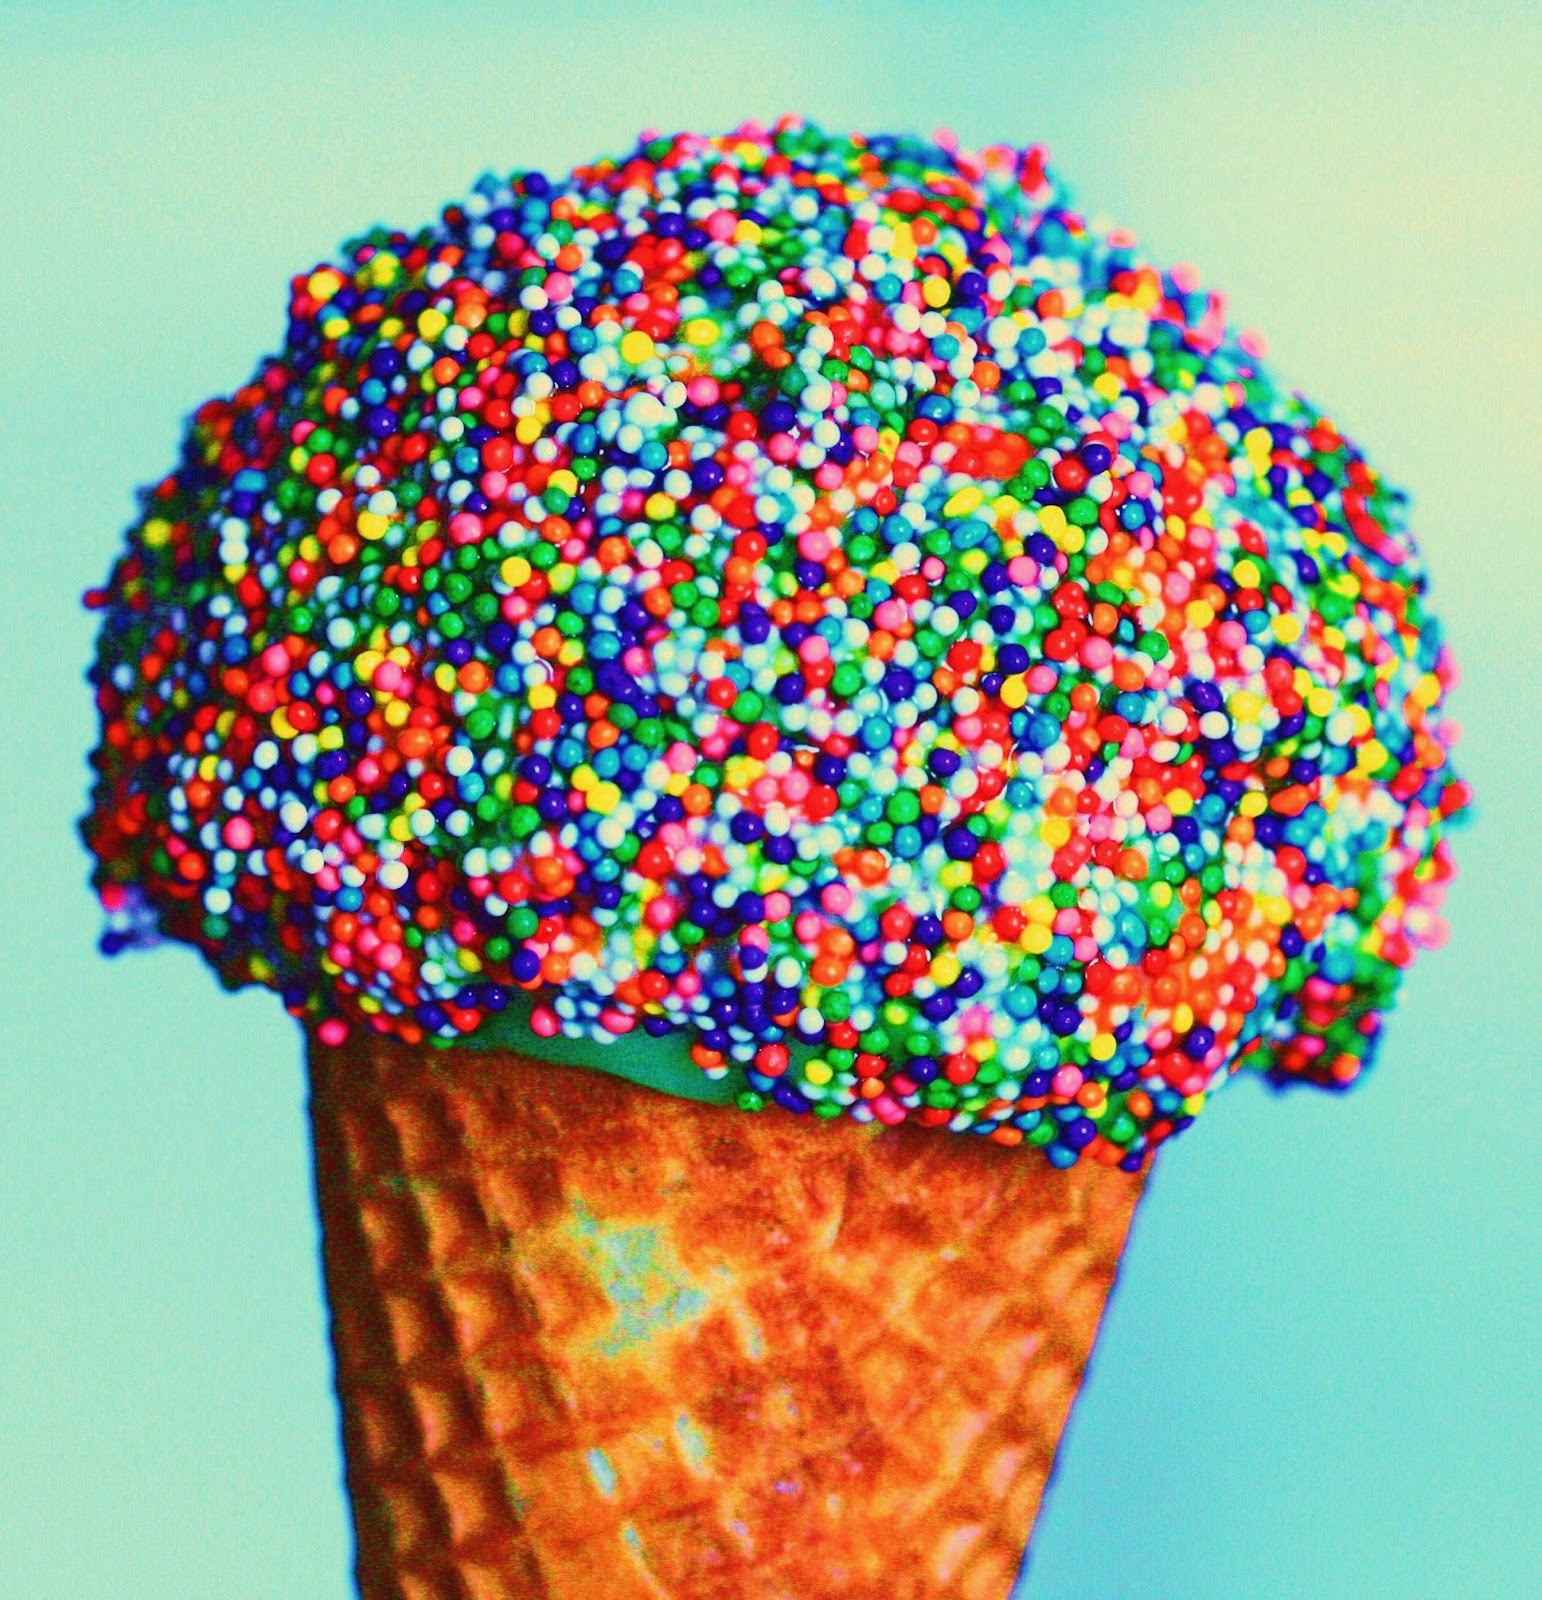 File:Ice cream cone.jpg - Wikimedia Commons